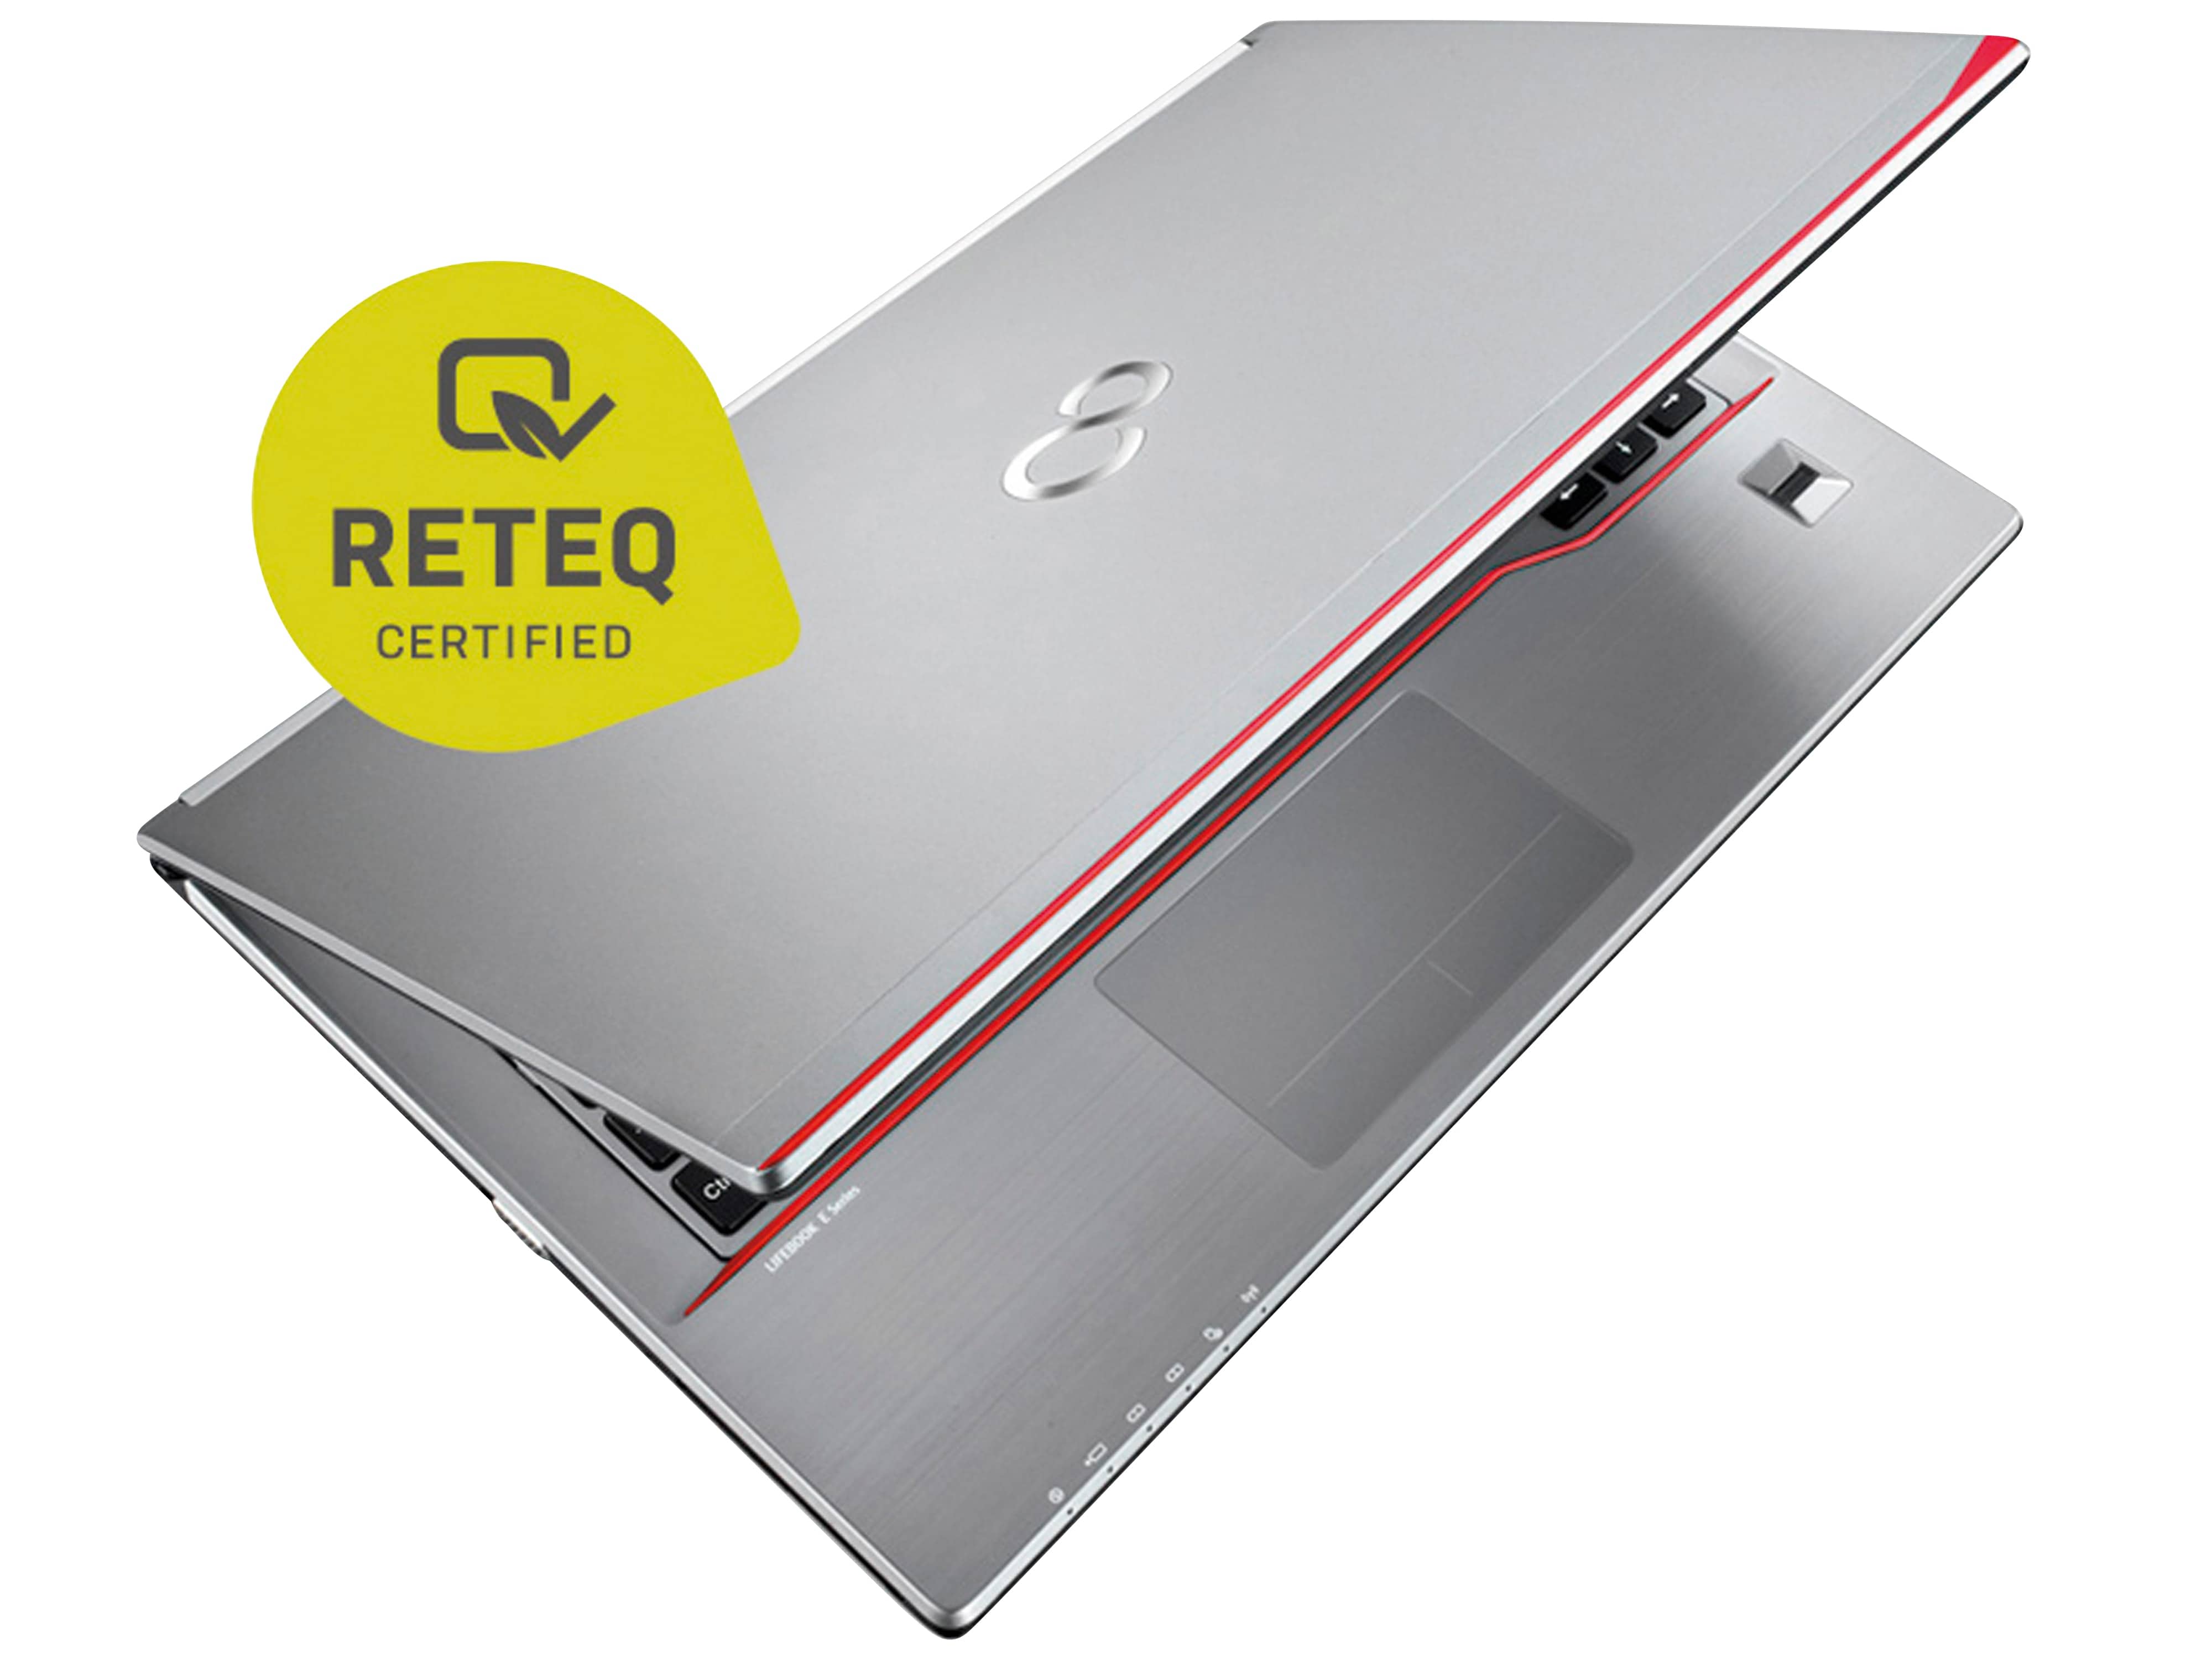 FUJITSU Notebook Lifebook E744, 35,6 cm (14"), Intel i5, 8GB, 256GB SSD, Win10H, refurbished